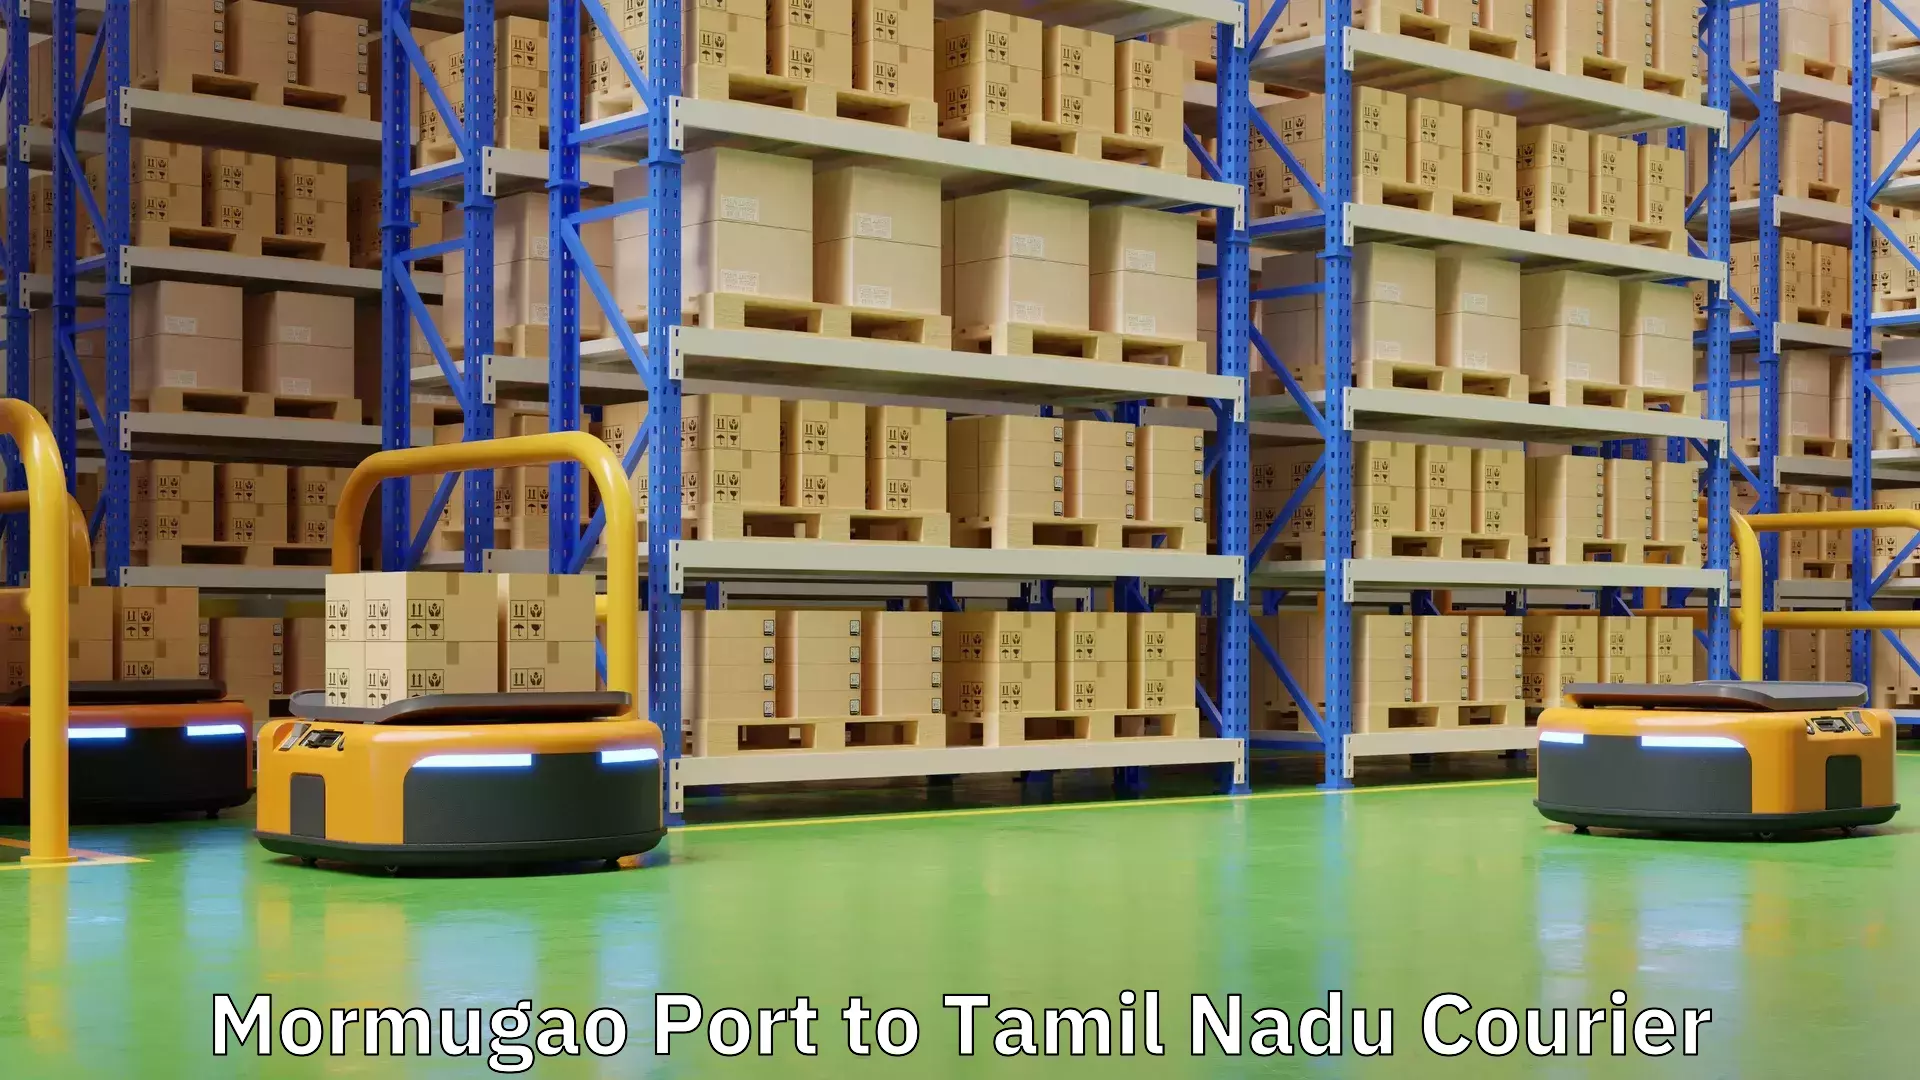 Advanced delivery network Mormugao Port to Tamil Nadu